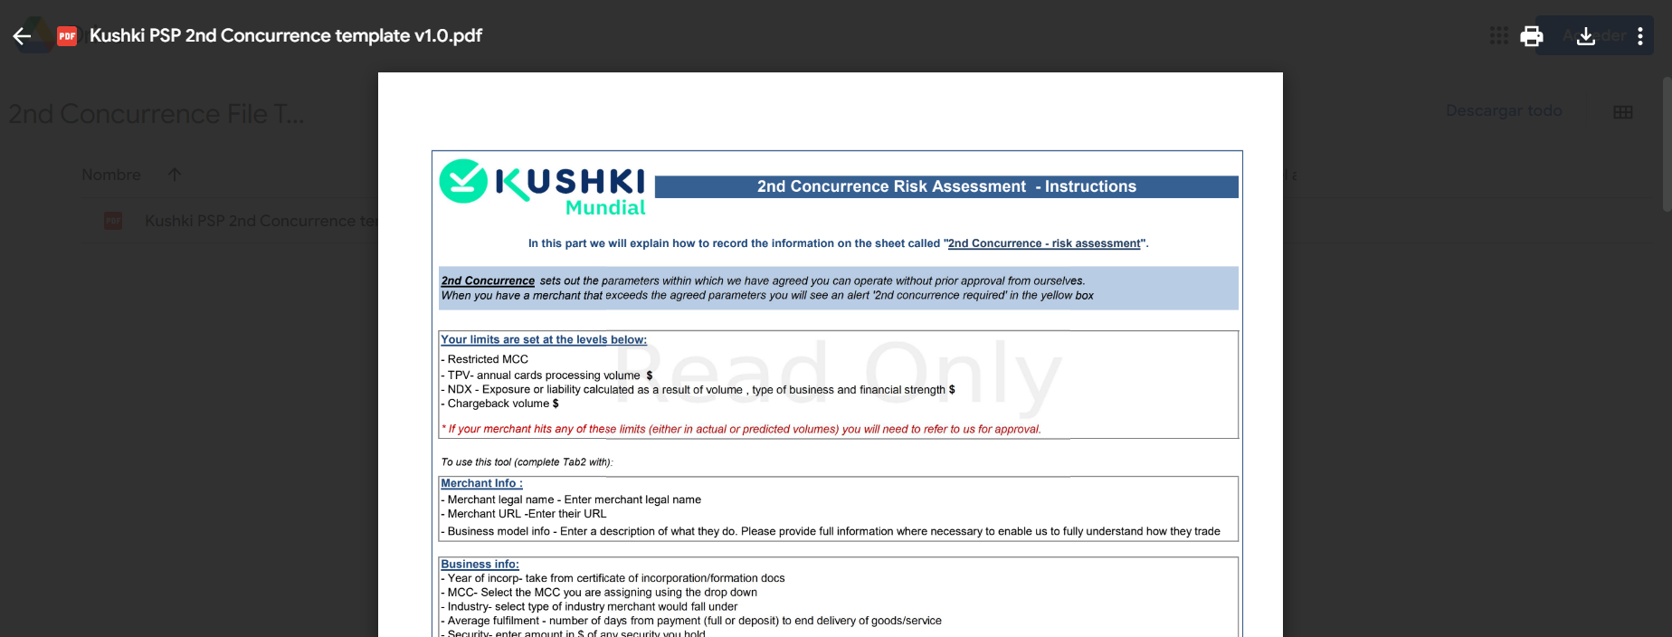 Kushki PSP 2nd concurrence template HD.png